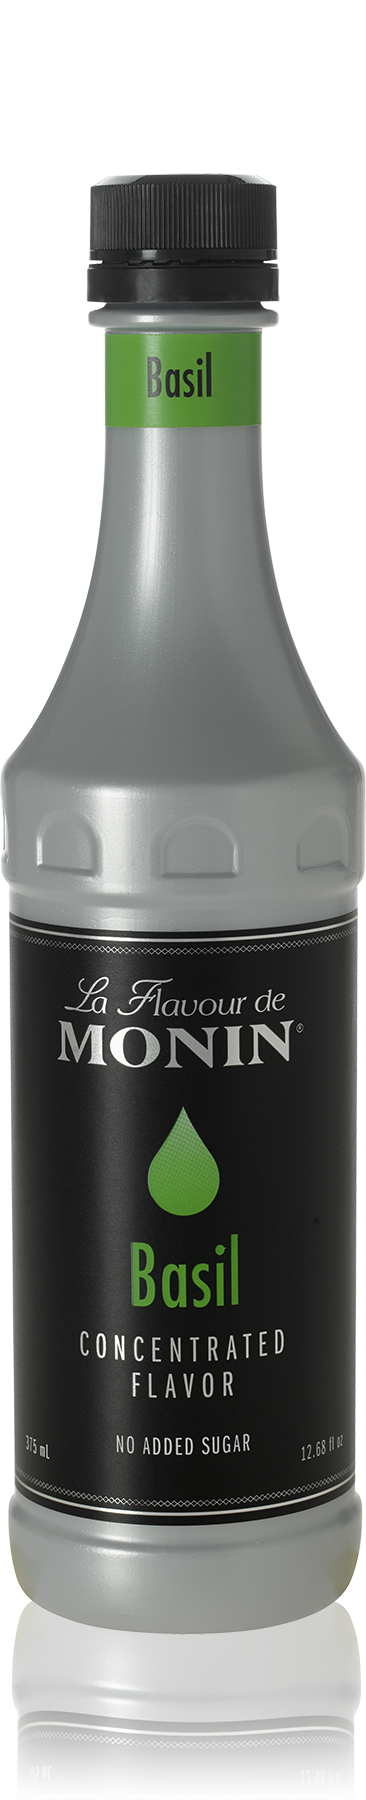 Monin Basil Concentrated Flavor 375mL Bottle